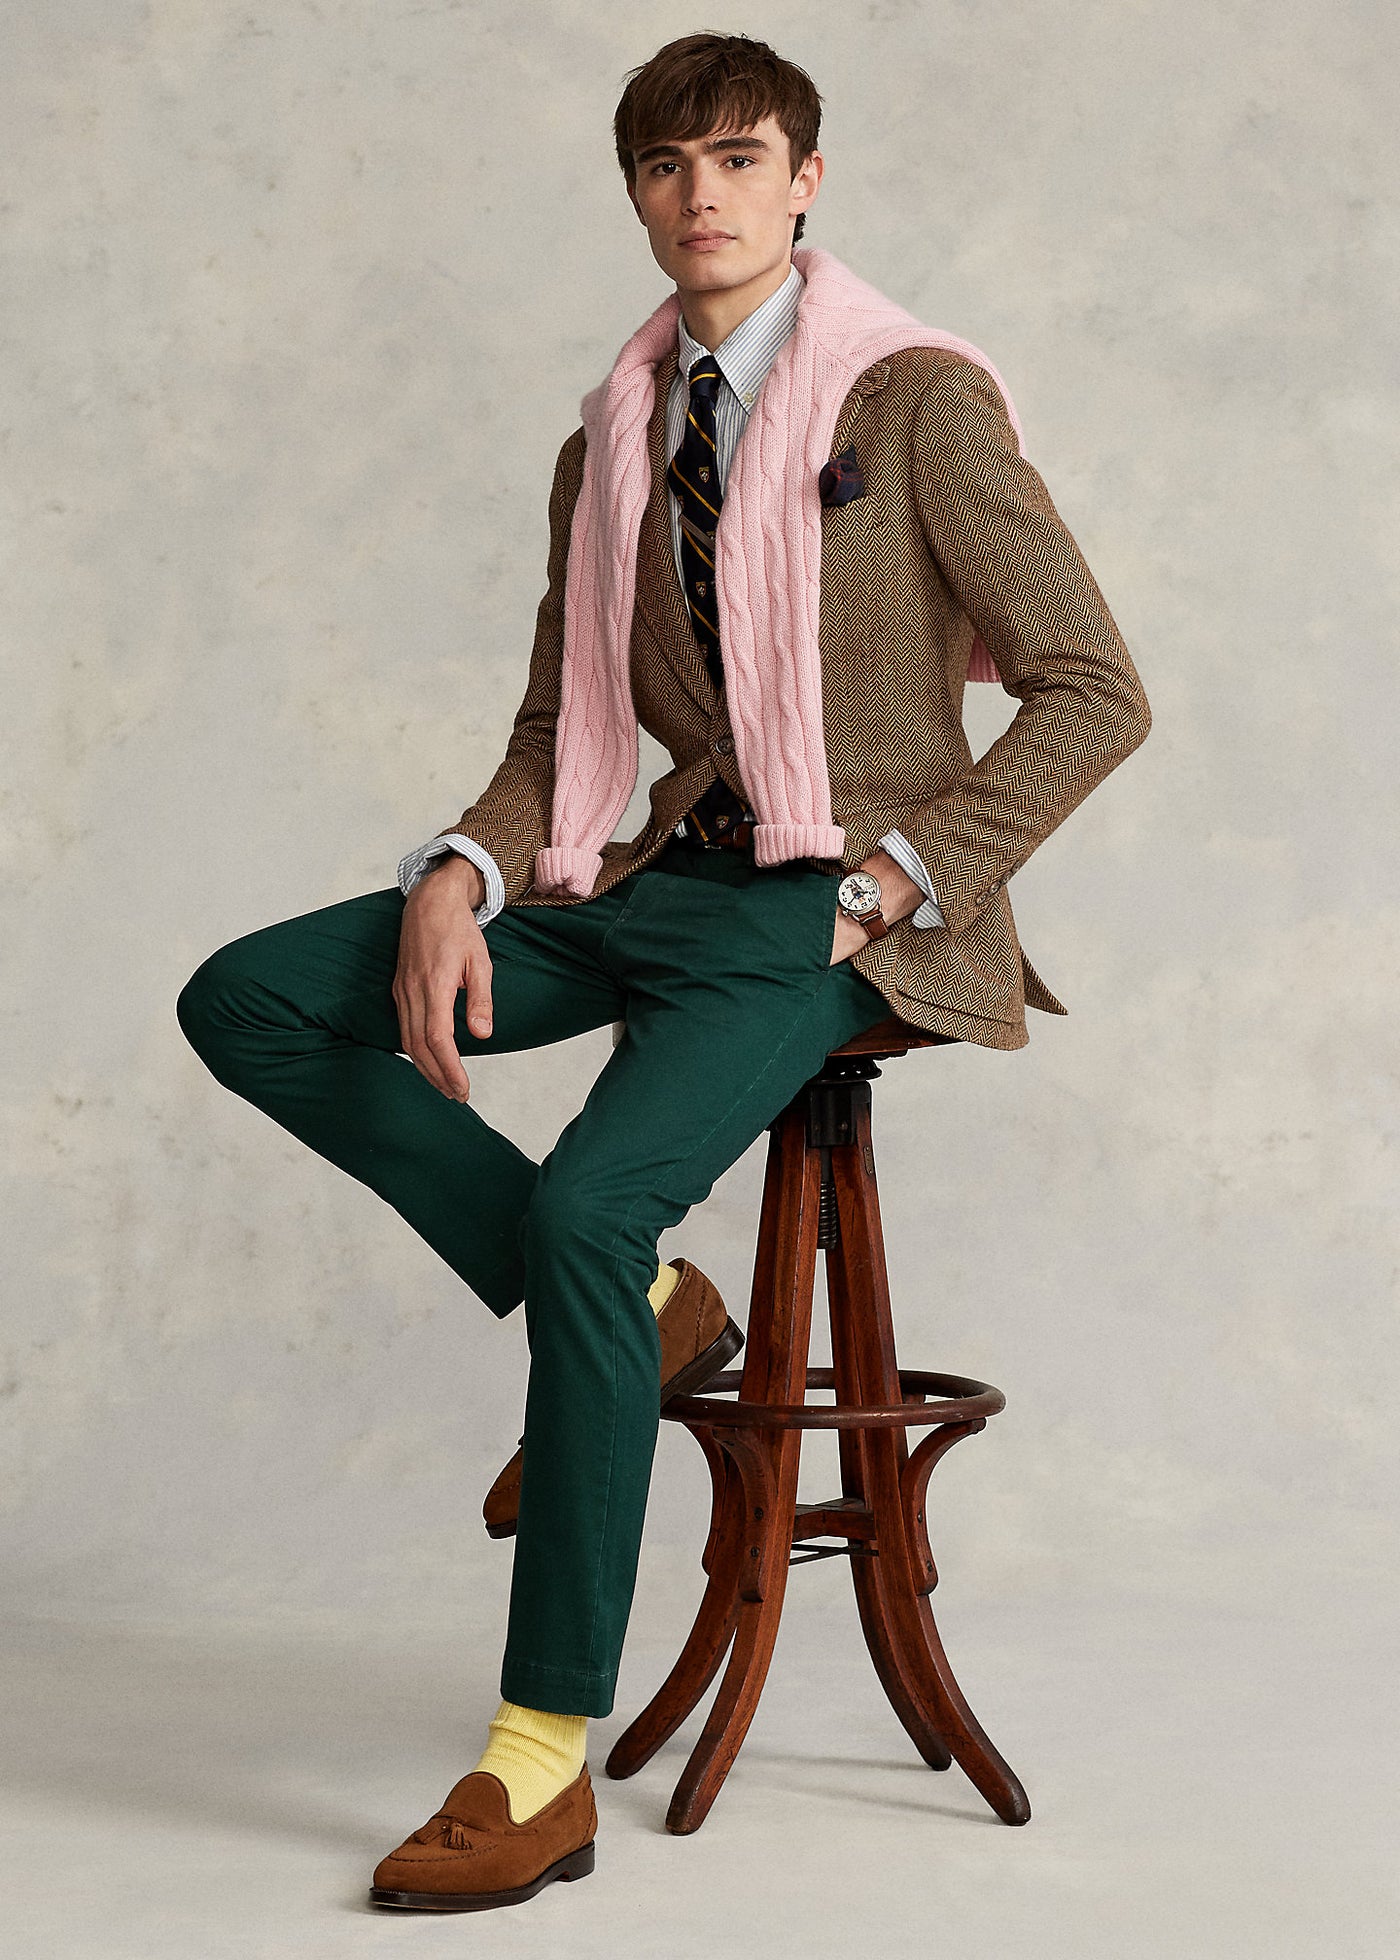 Ralph Lauren Stretch Slim-Fit Twill Trouser | College Green